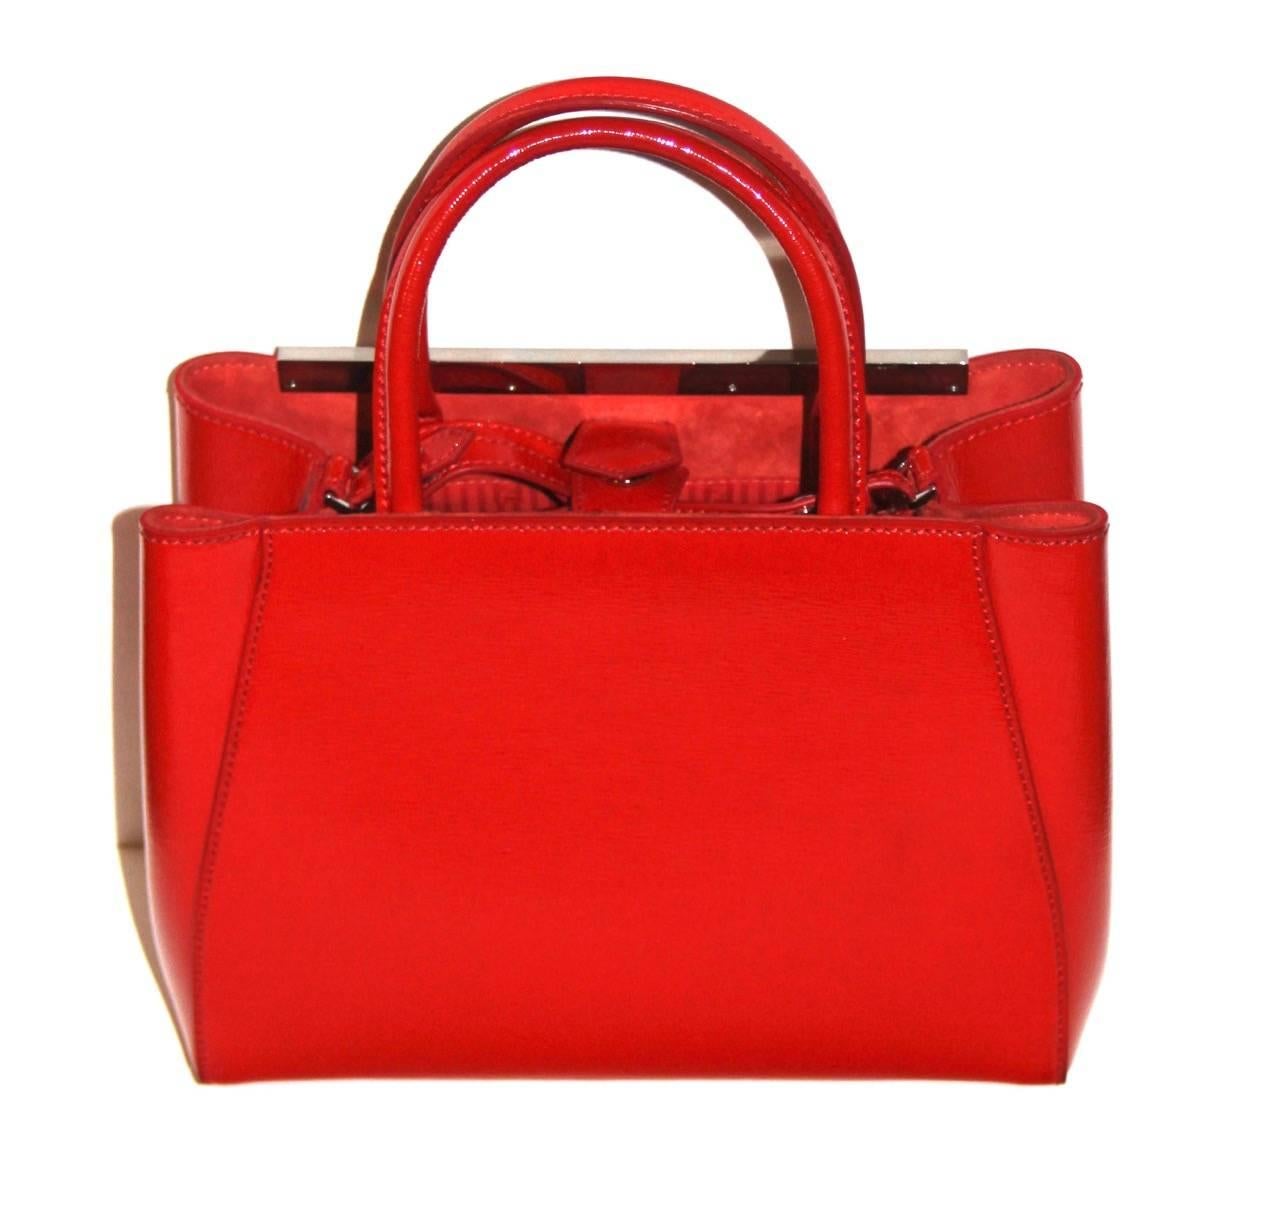 red patent leather handbag